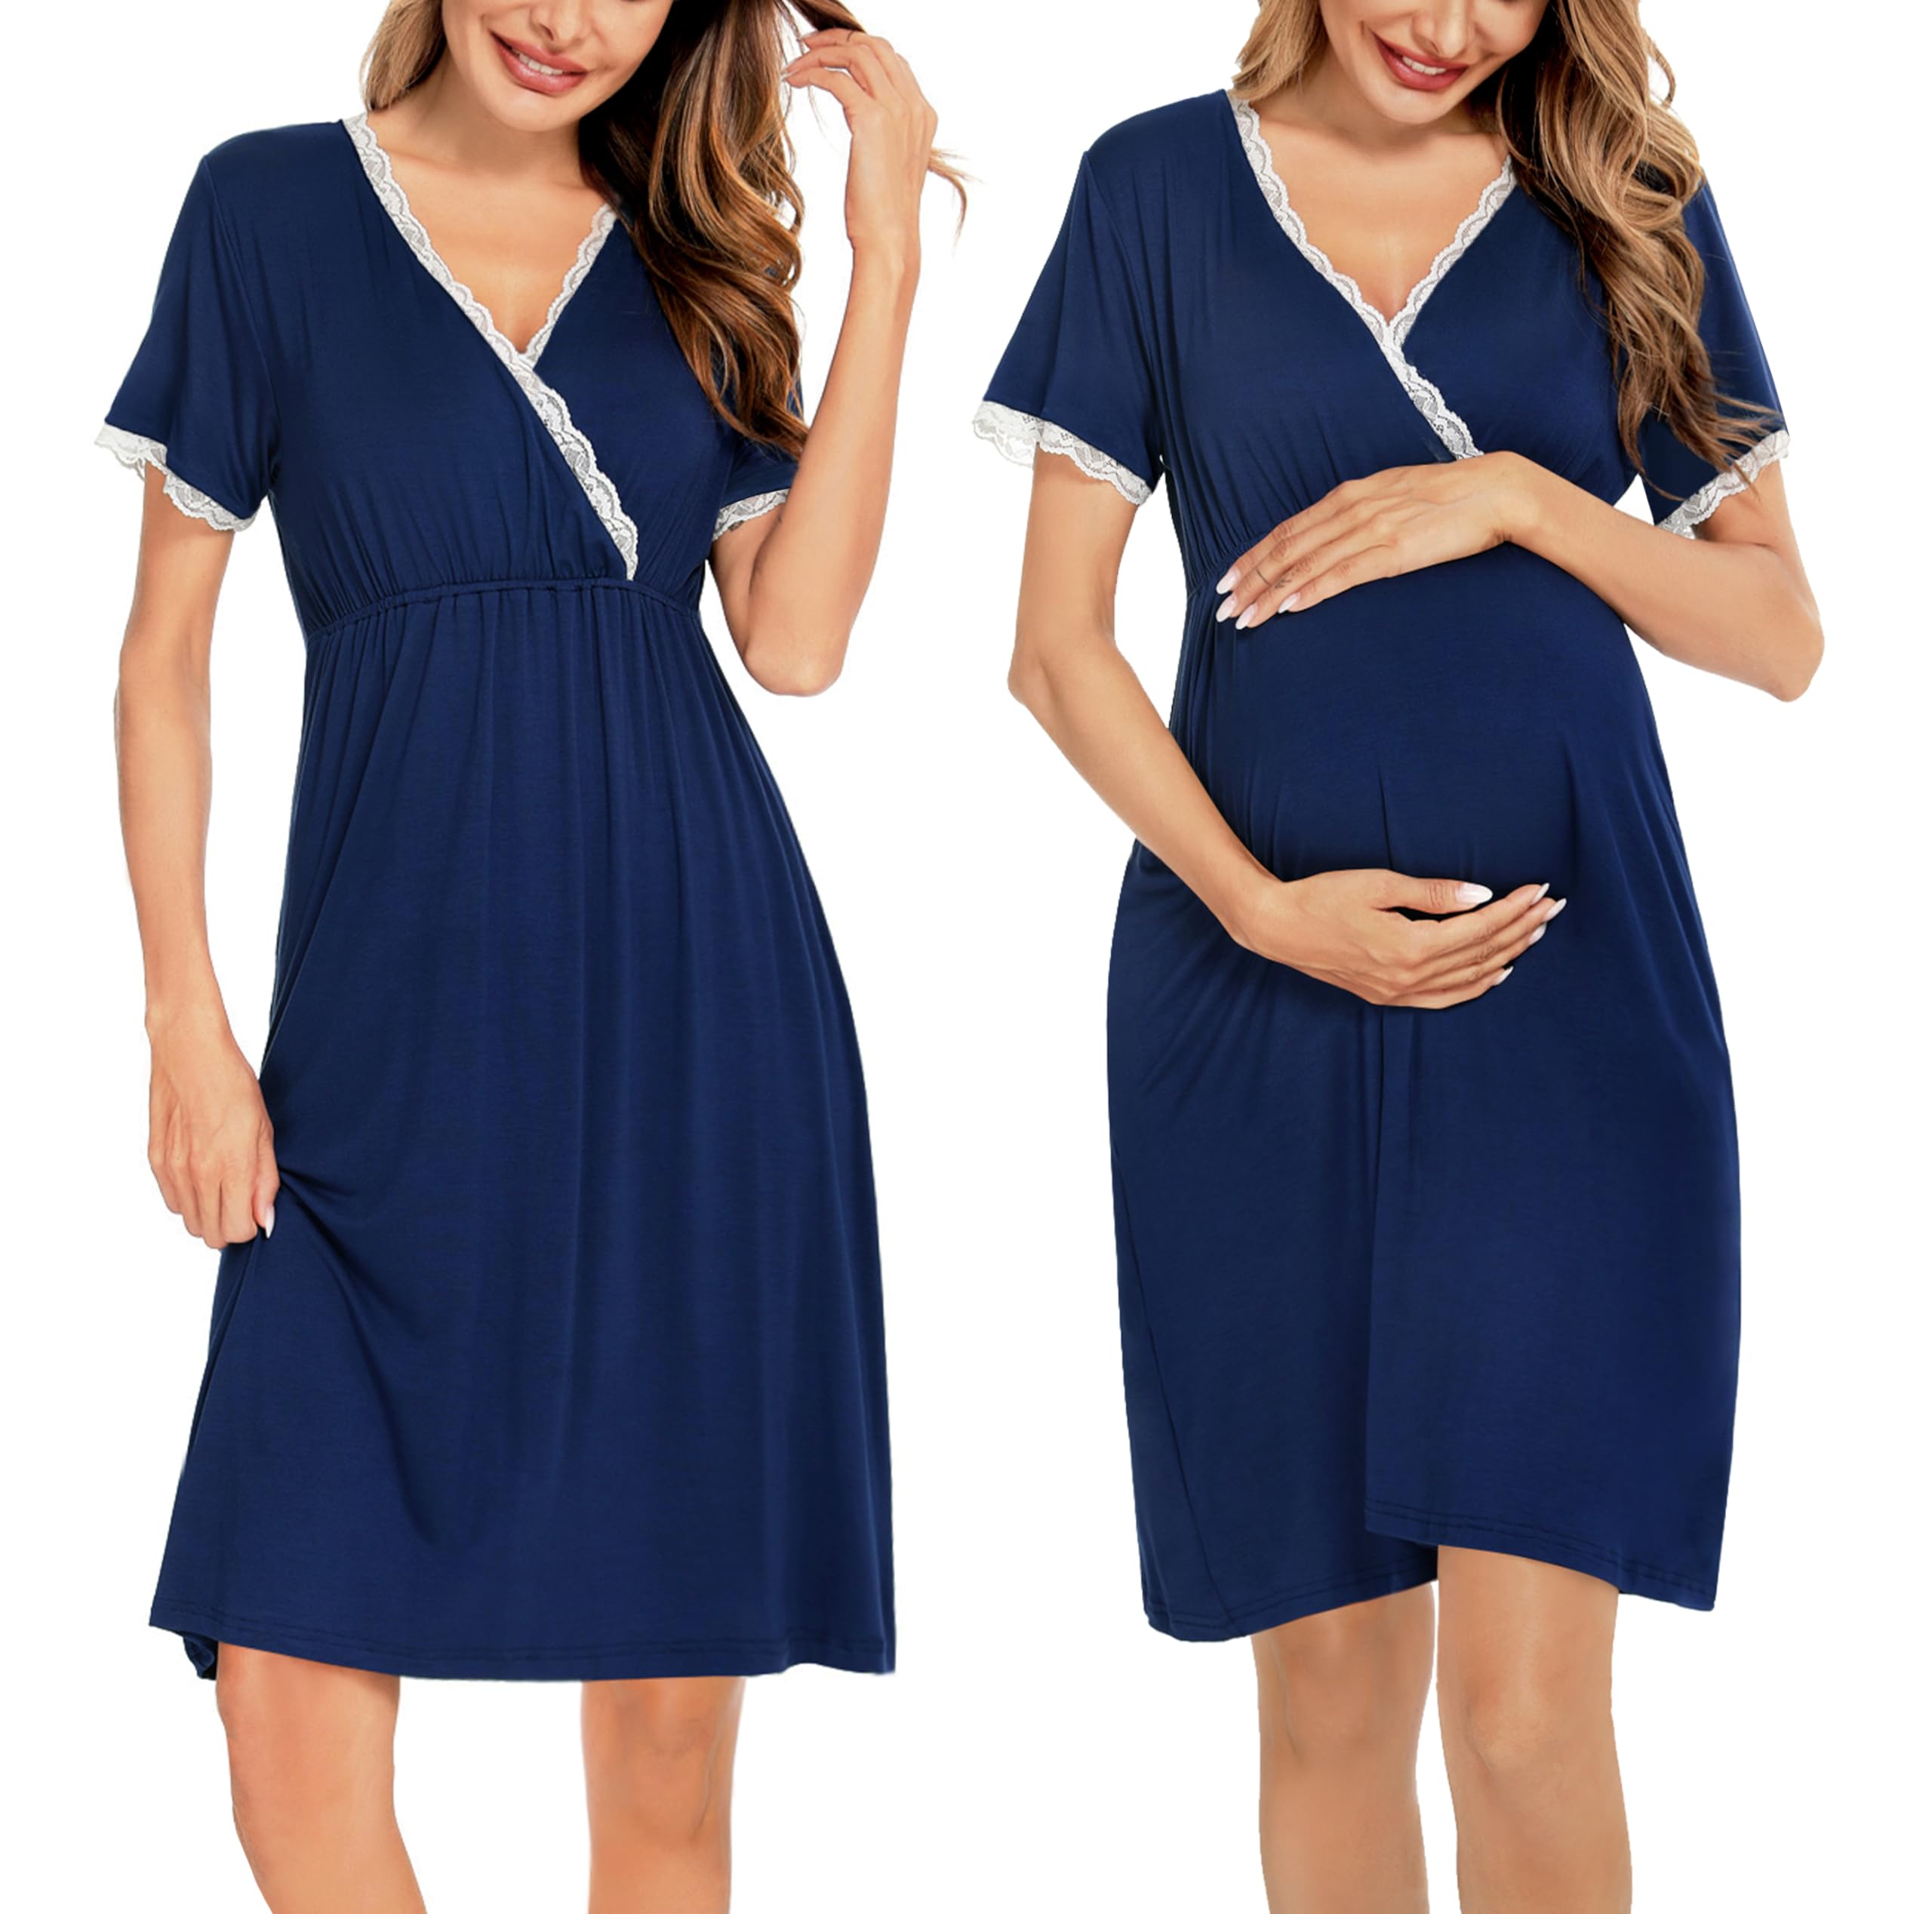 SWOMOG Women 3 in 1 Delivery/Labor/Nursing Nightgown Short Sleeve Pleated Maternity Sleepwear for Breastfeeding Navy Blue